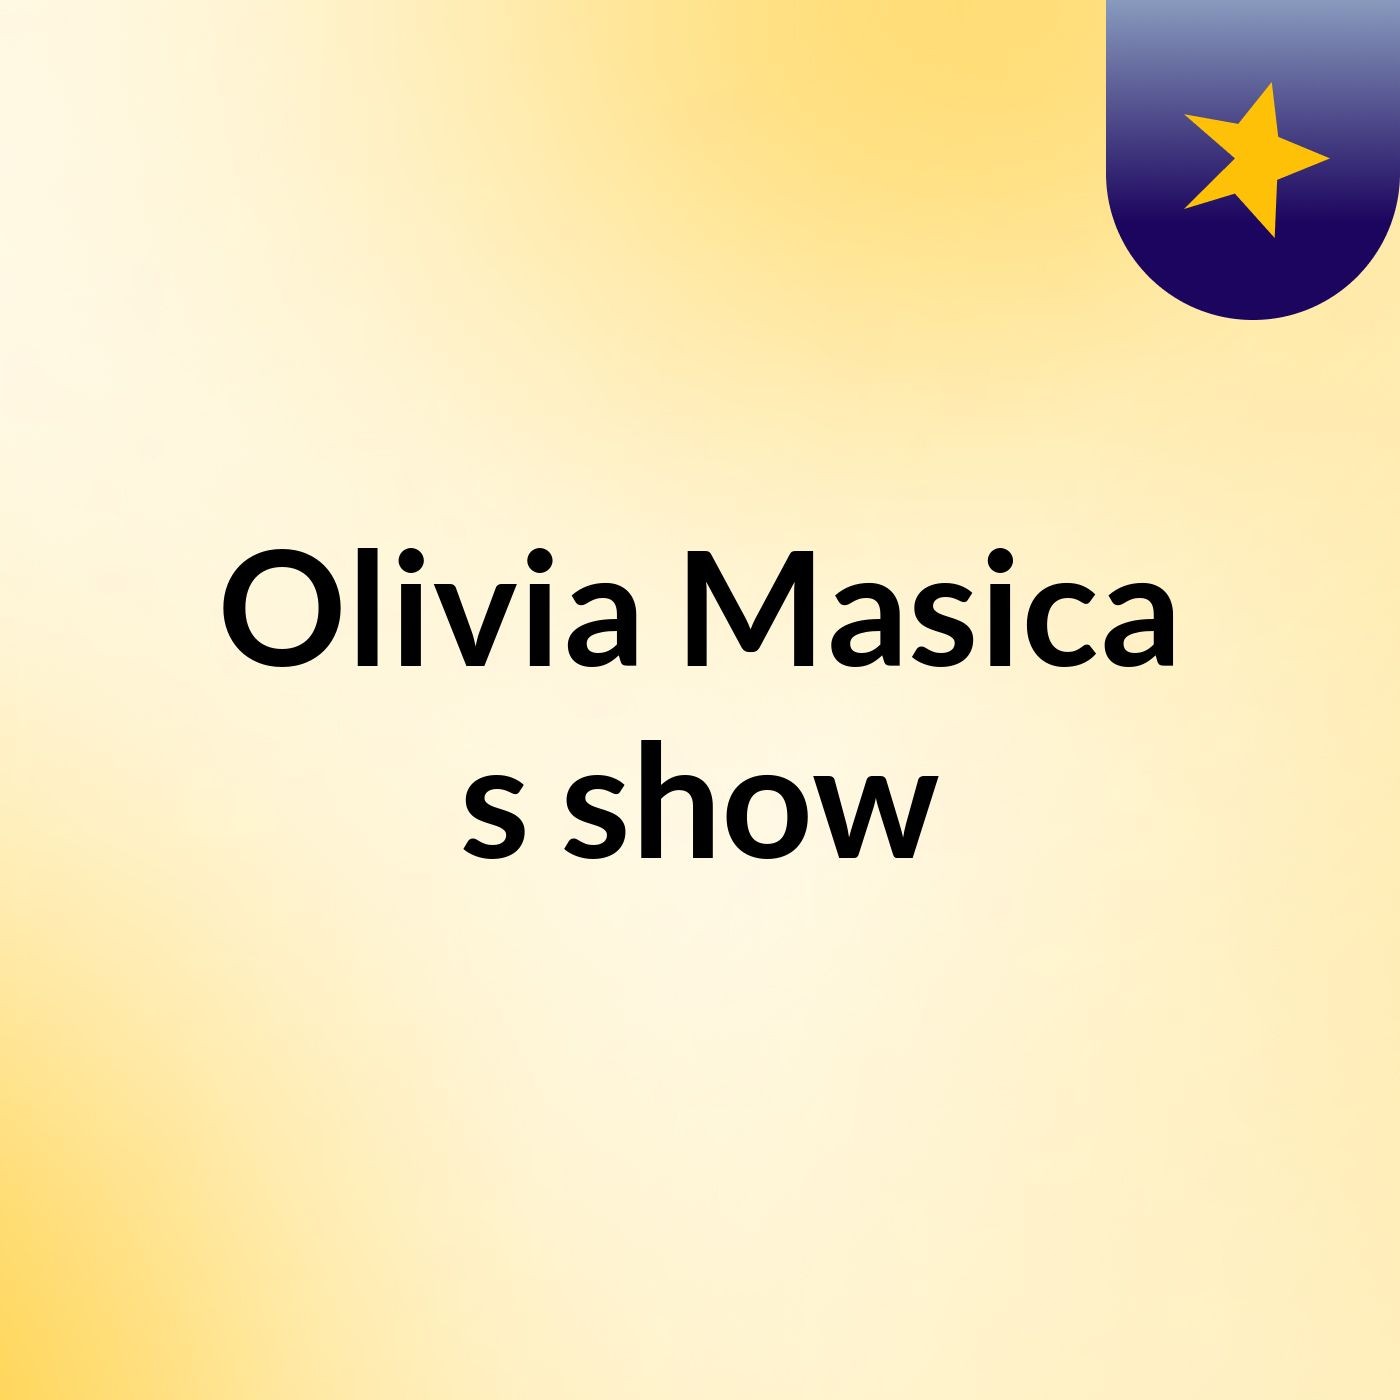 Olivia Masica's show